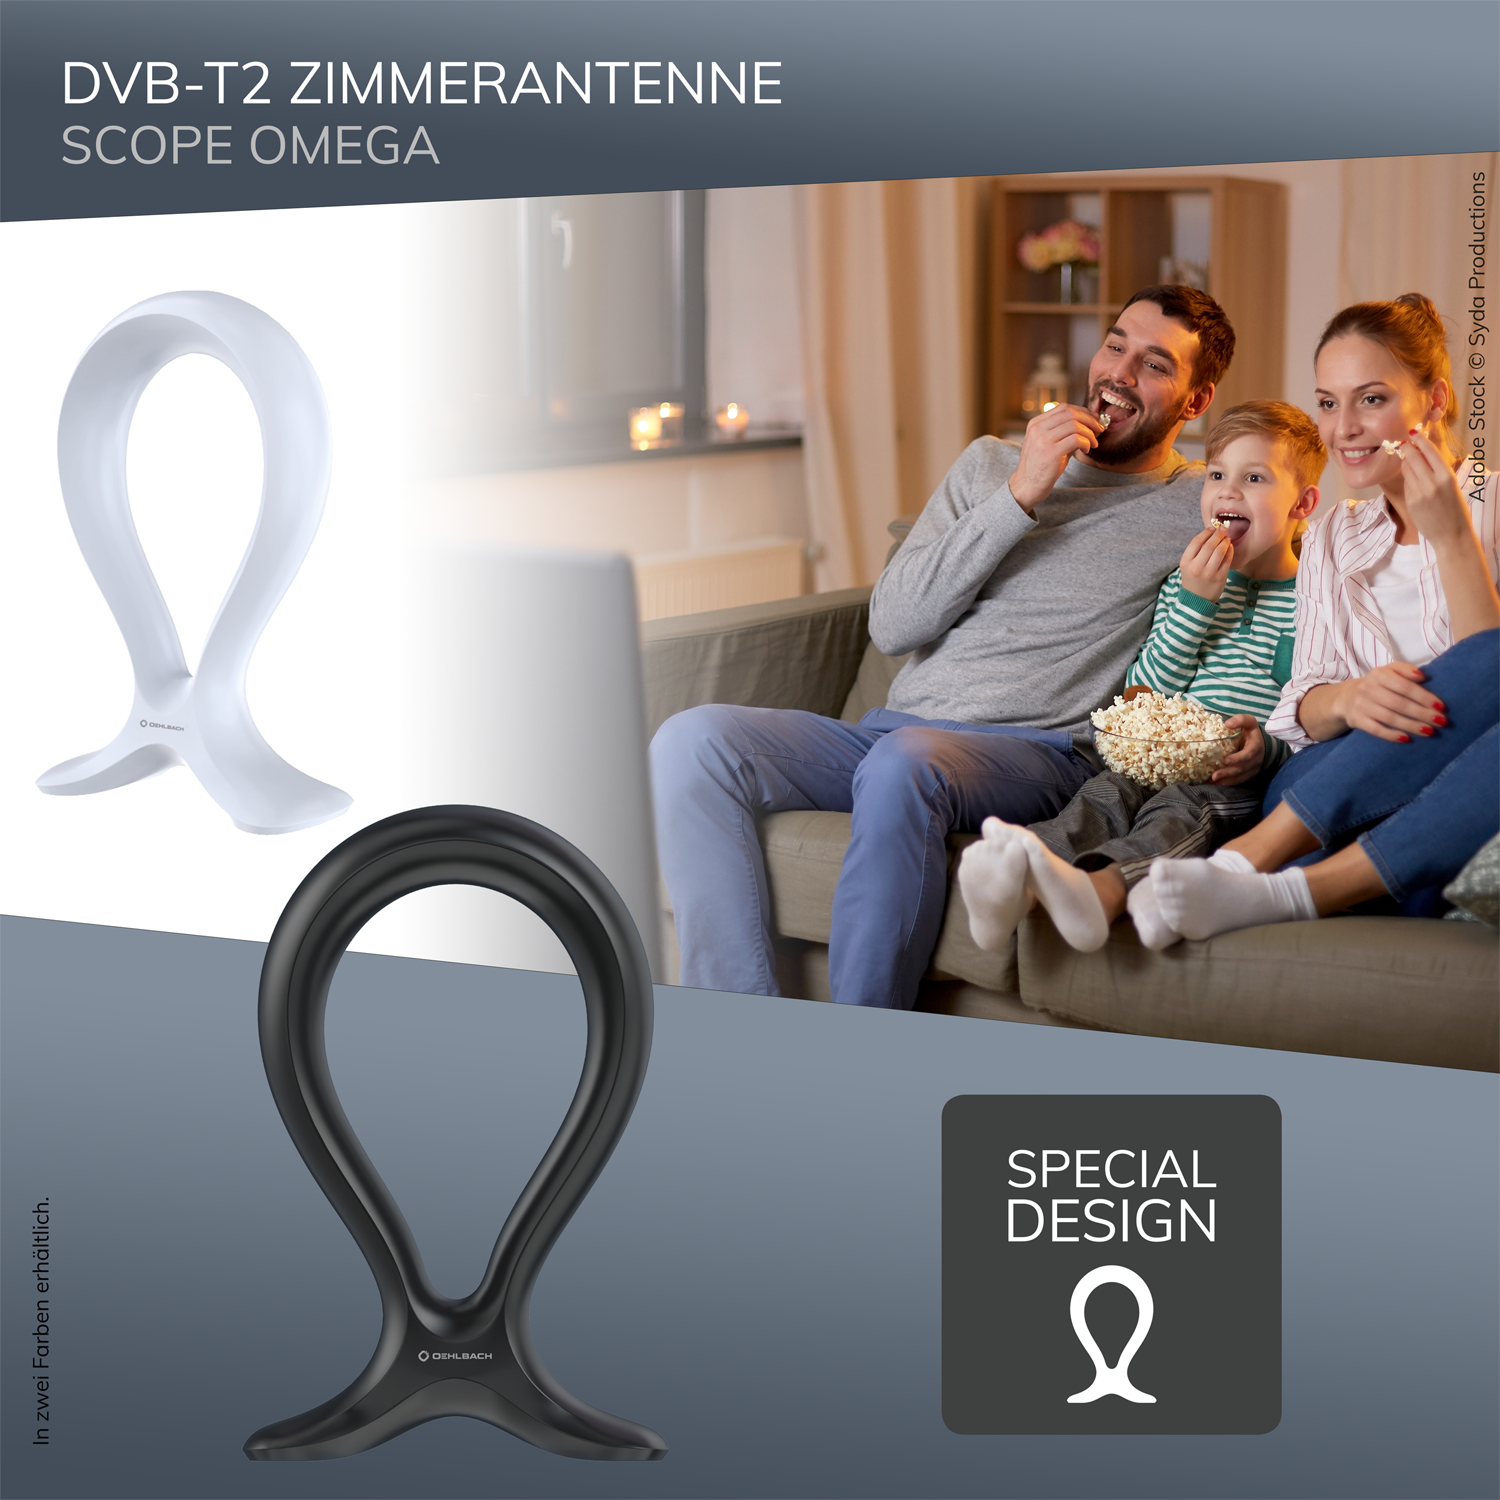 OMEGA SCHWARZ Zimmerantenne DVB-T2 OEHLBACH ANTENNE HD SCOPE DVB-T2